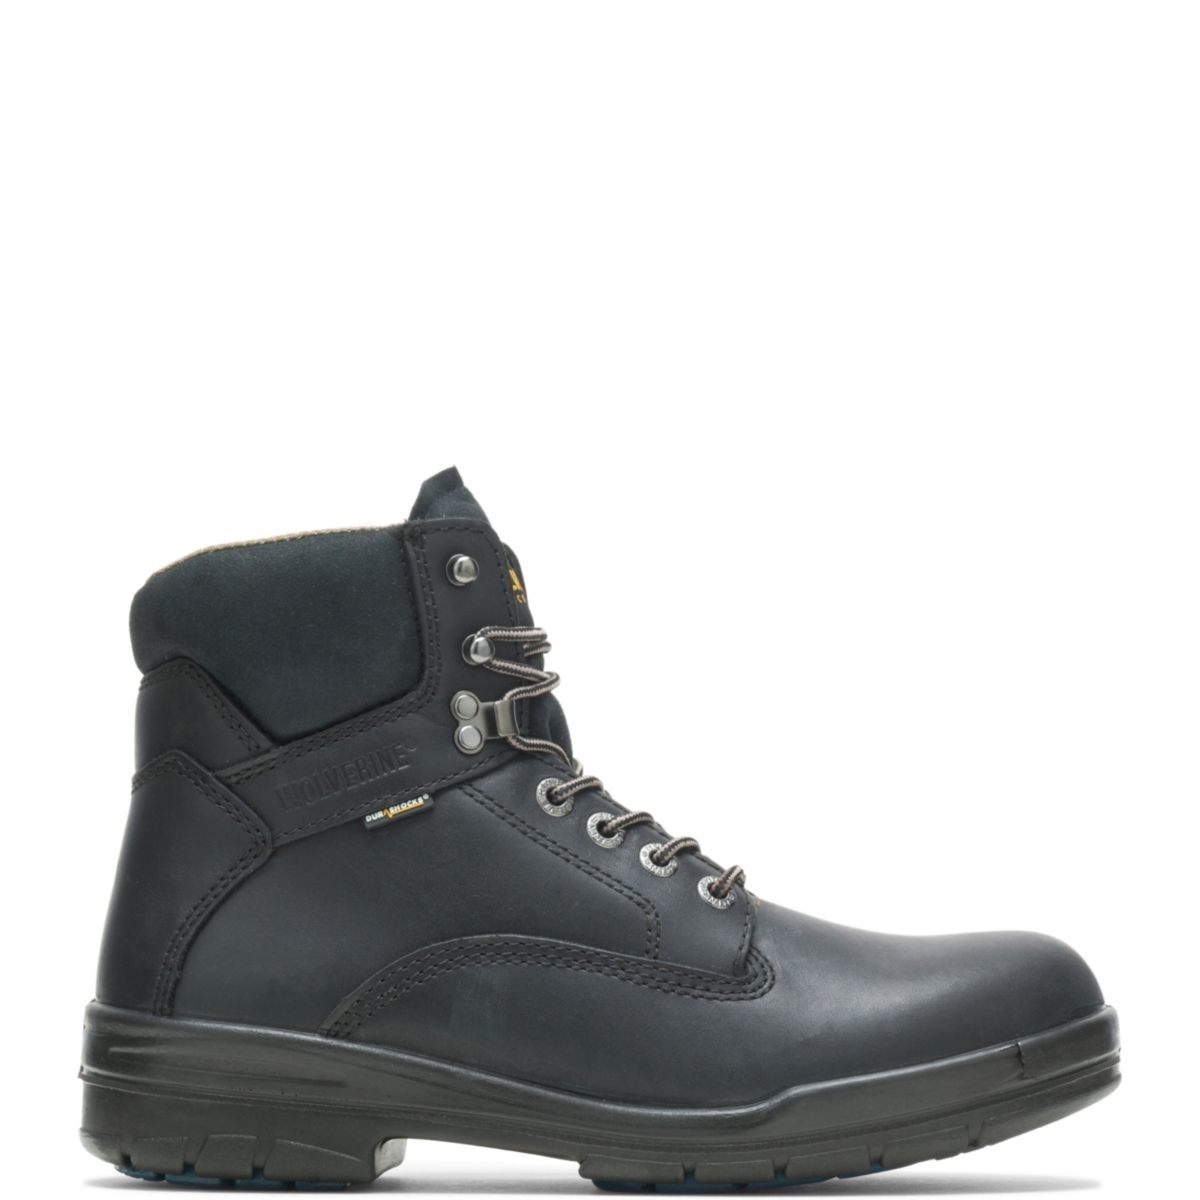 WOLVERINE Men's 6 DuraShocksÂ® Slip Resistant Direct-Attached Lined Soft Toe Work Boot Black - W03123 14 WIDE BLACK - BLACK, 12 Wide